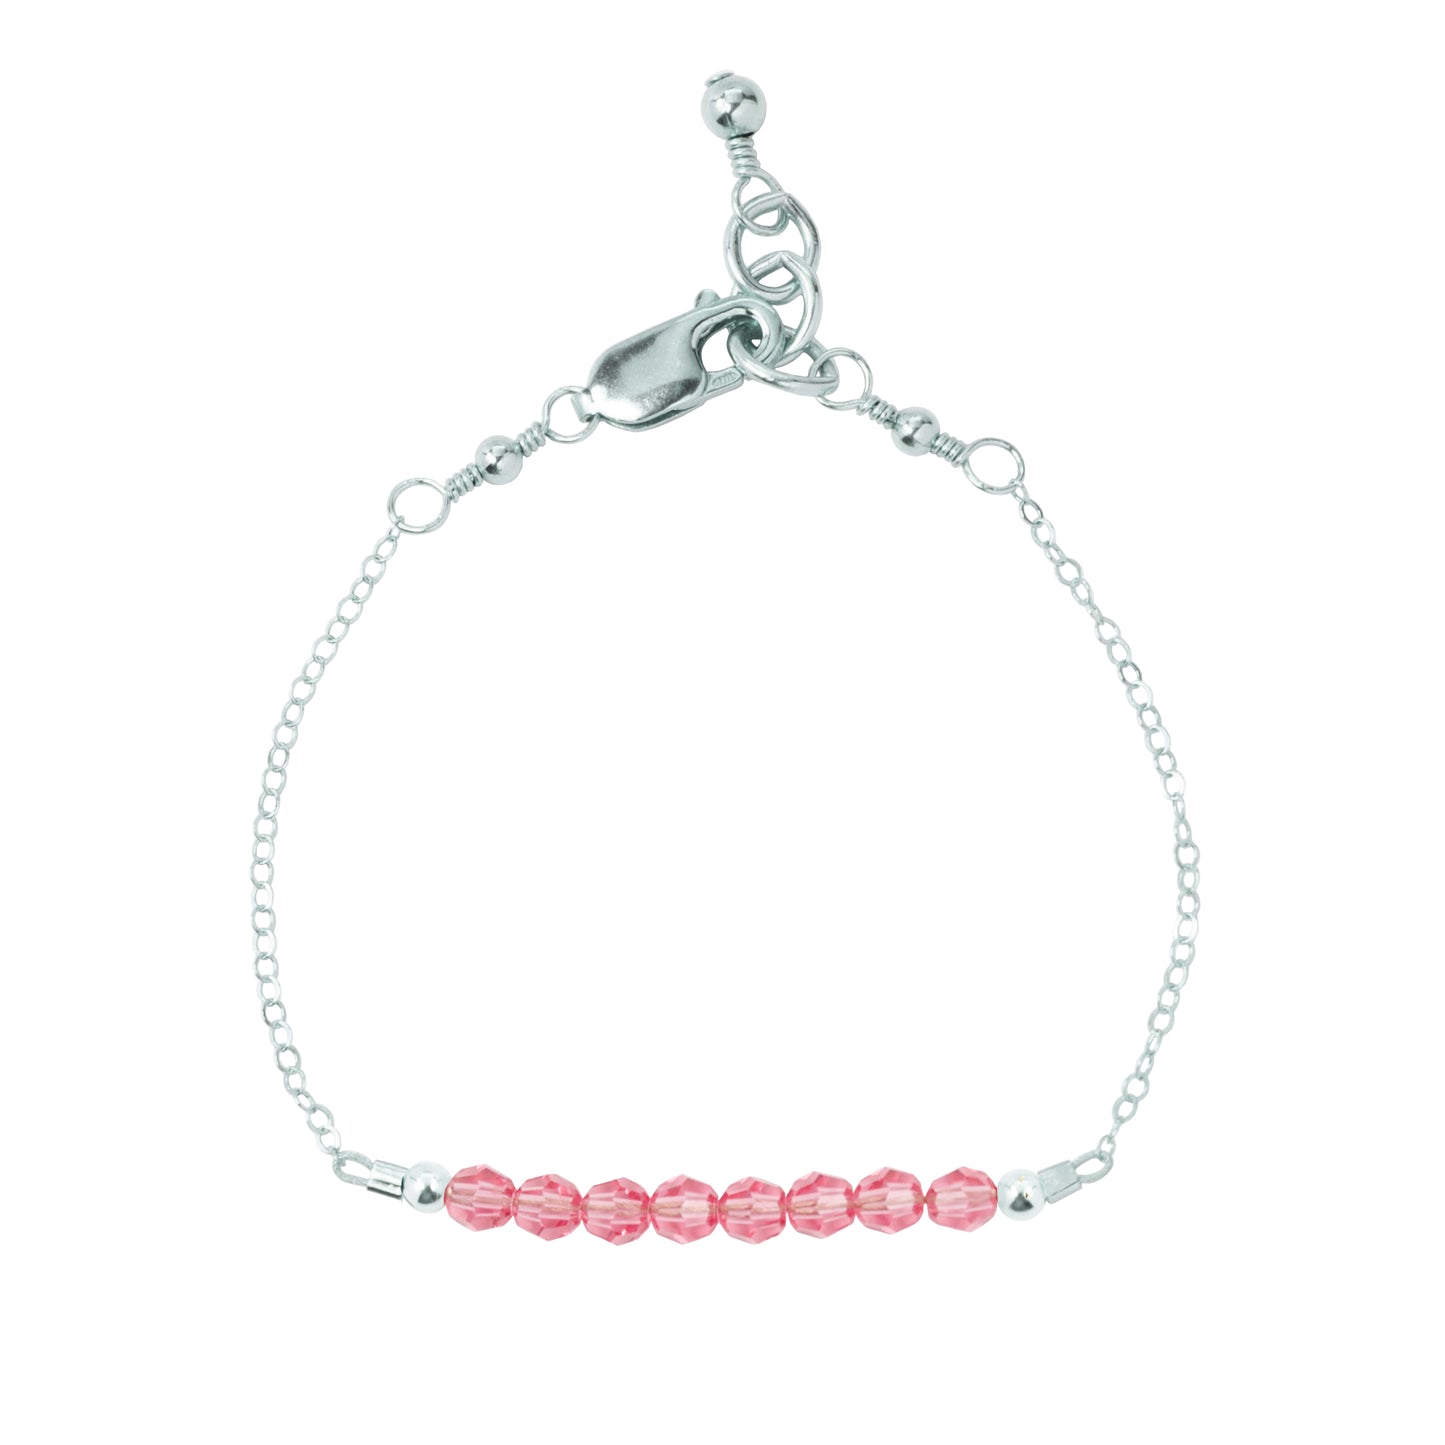 October Adult Chain Bracelet (4MM beads)